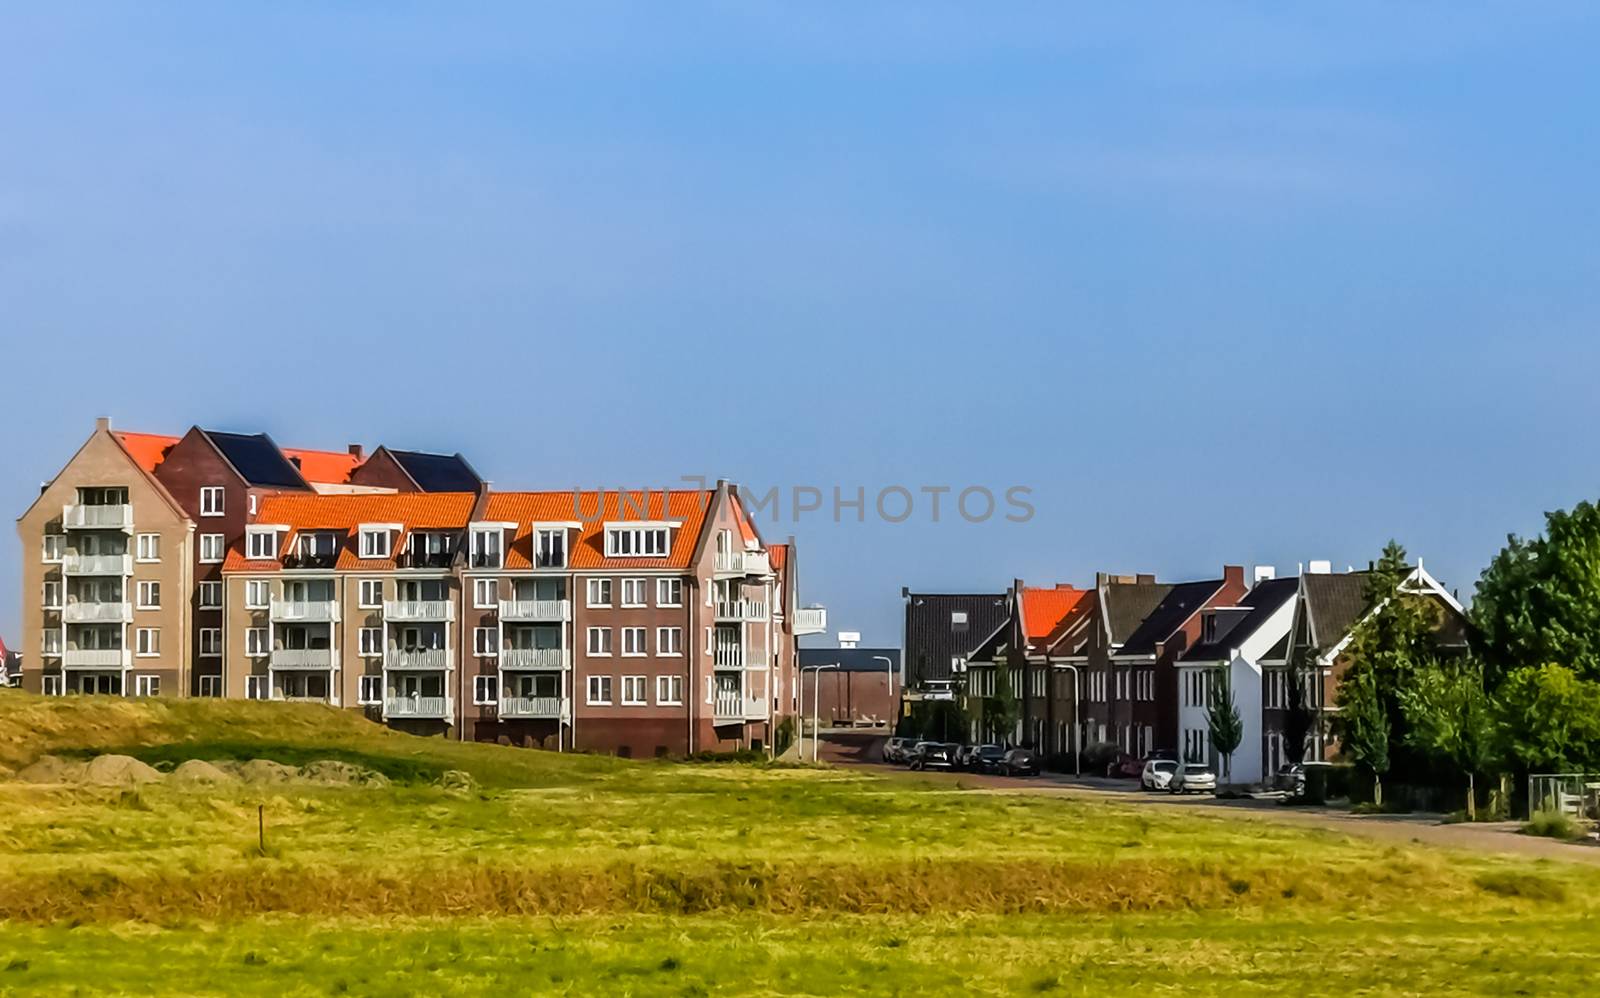 village landscape of sint Annaland, touristic town in zeeland, The Netherlands